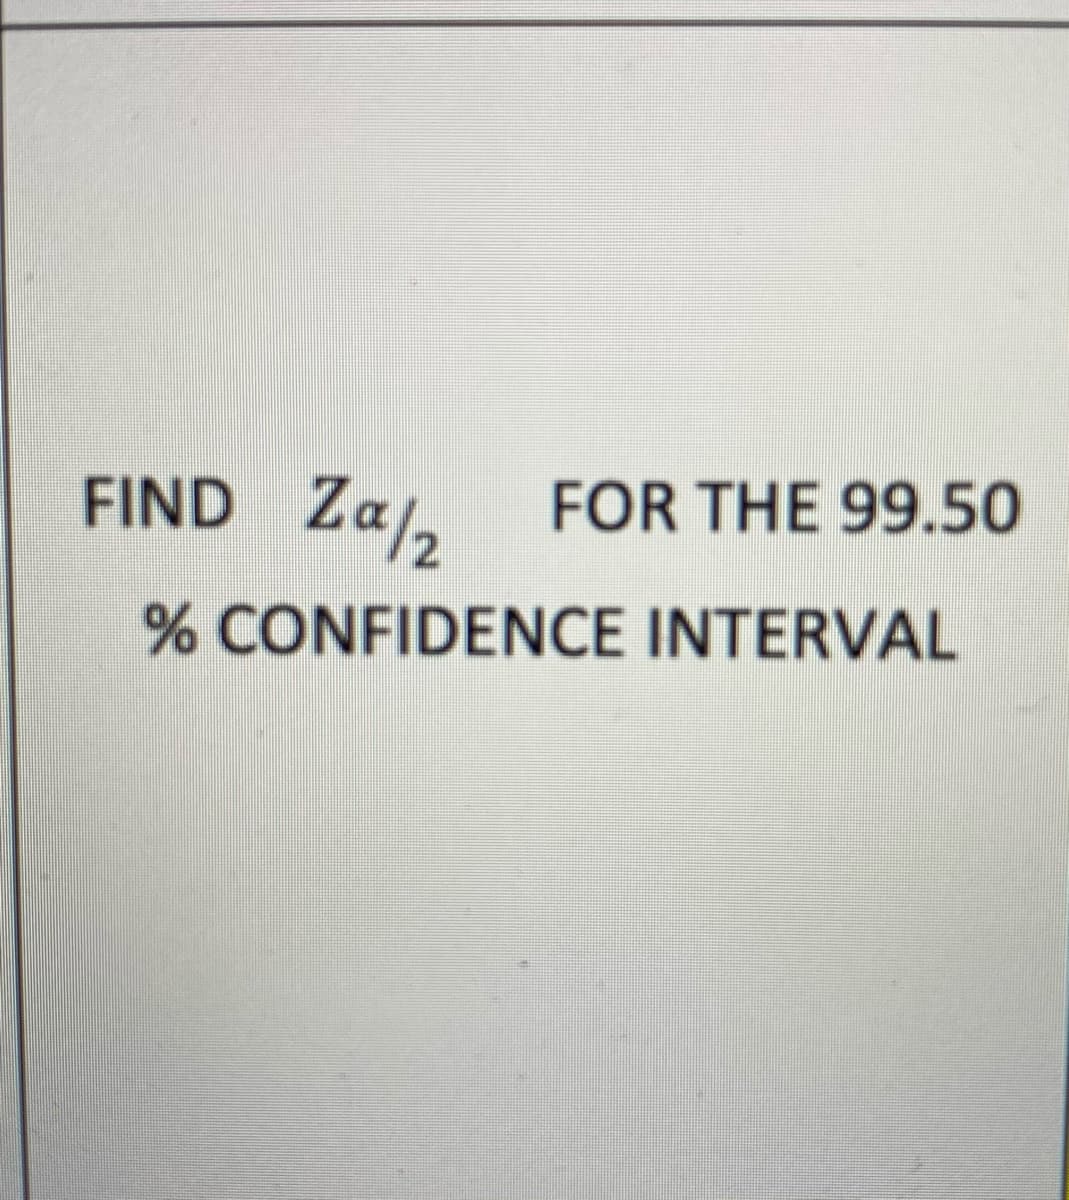 FIND Za,
FOR THE 99.50
% CONFIDENCE INTERVAL
